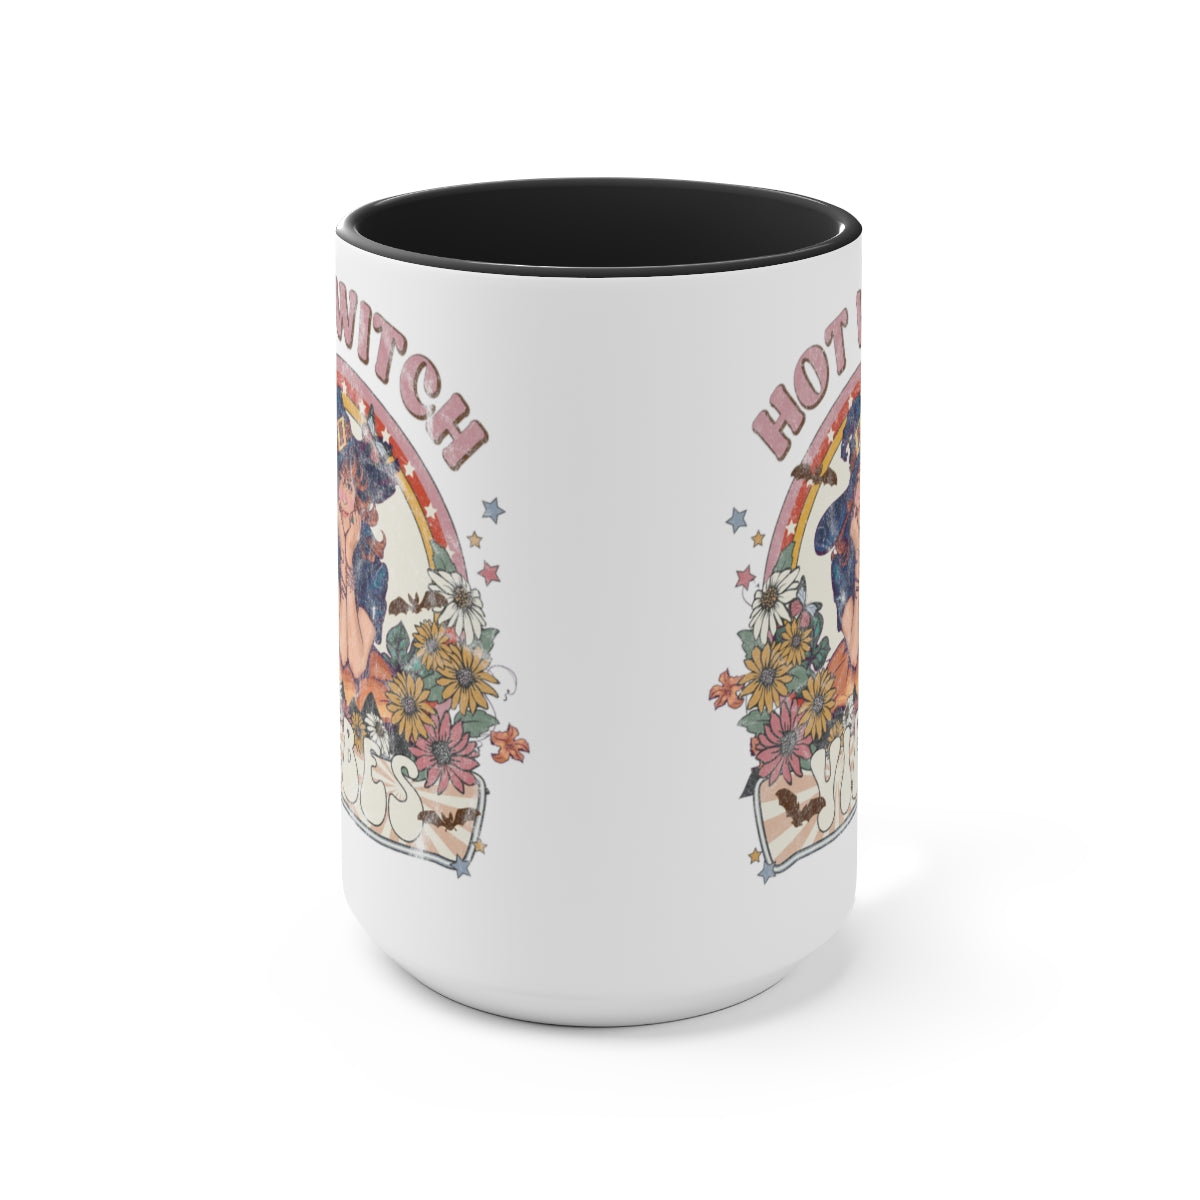 Retro Hot witch vibes coffee mug for Halloween - 15 oz